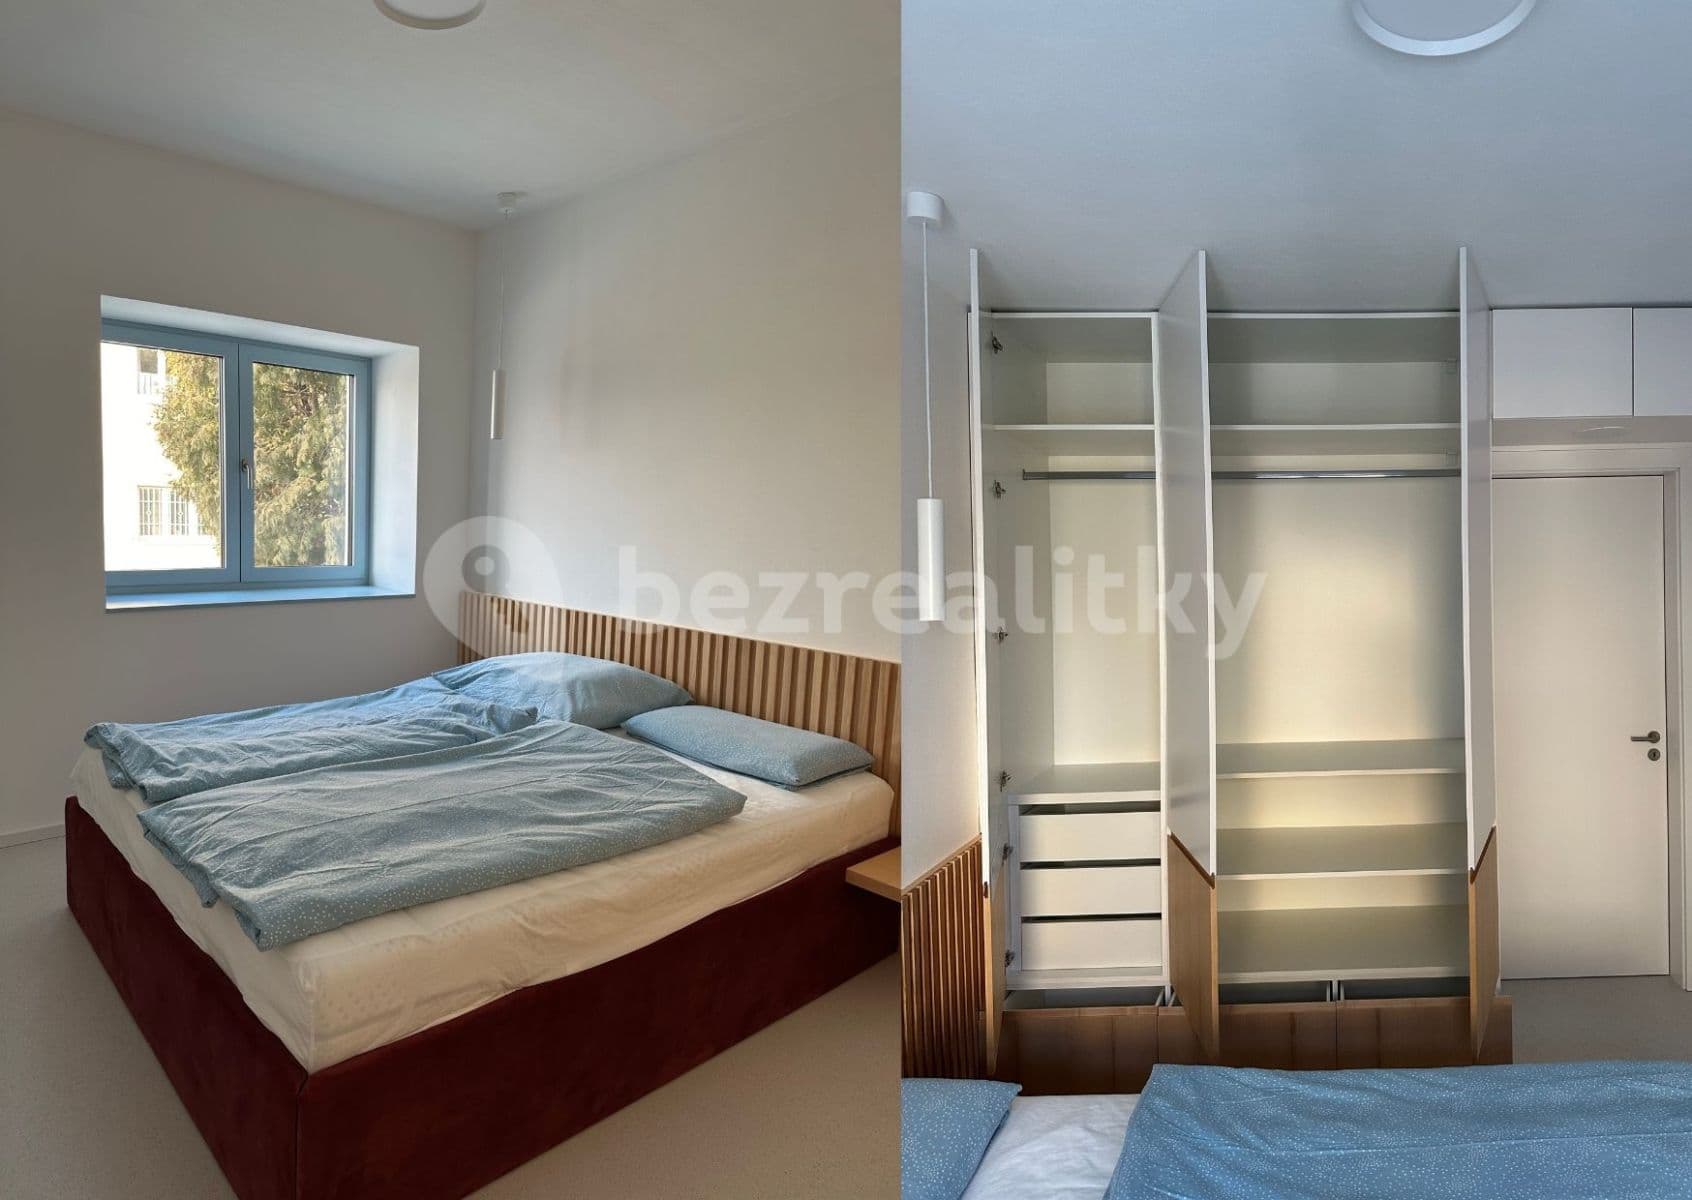 1 bedroom with open-plan kitchen flat to rent, 49 m², Svátkova, Prague, Prague